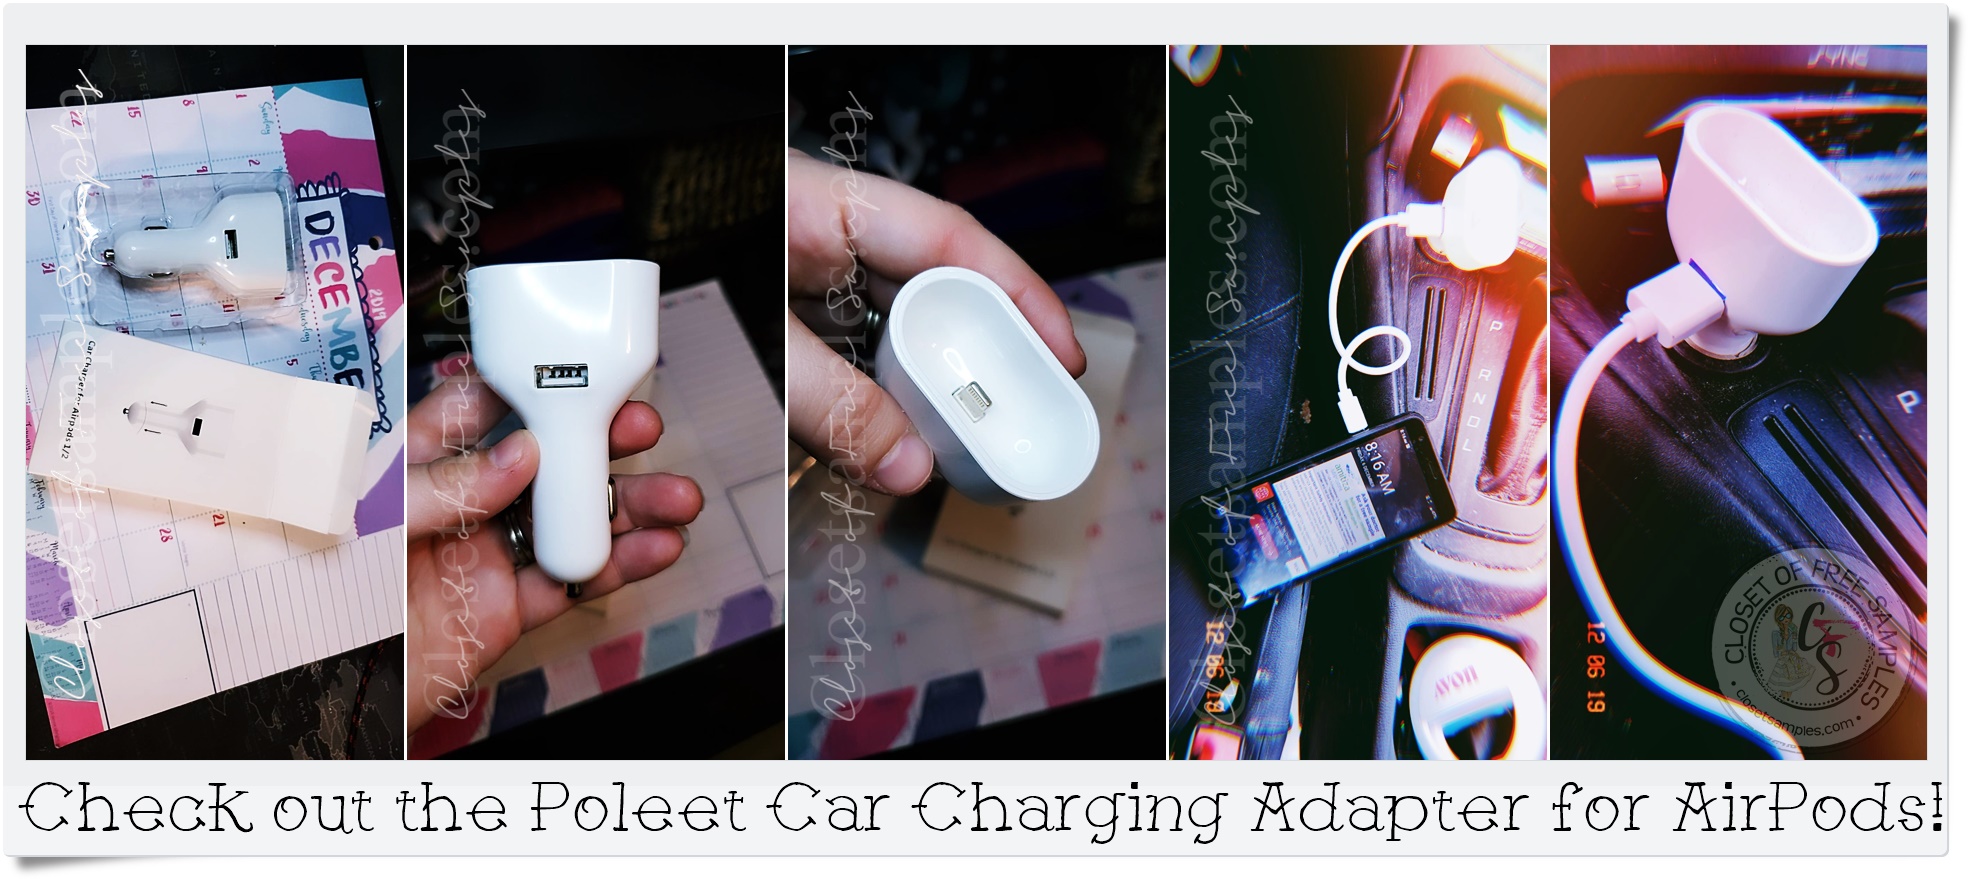 Poleet-Car-Charging-Adapter-for-AirPods-Review-Closetsamples2.jpg